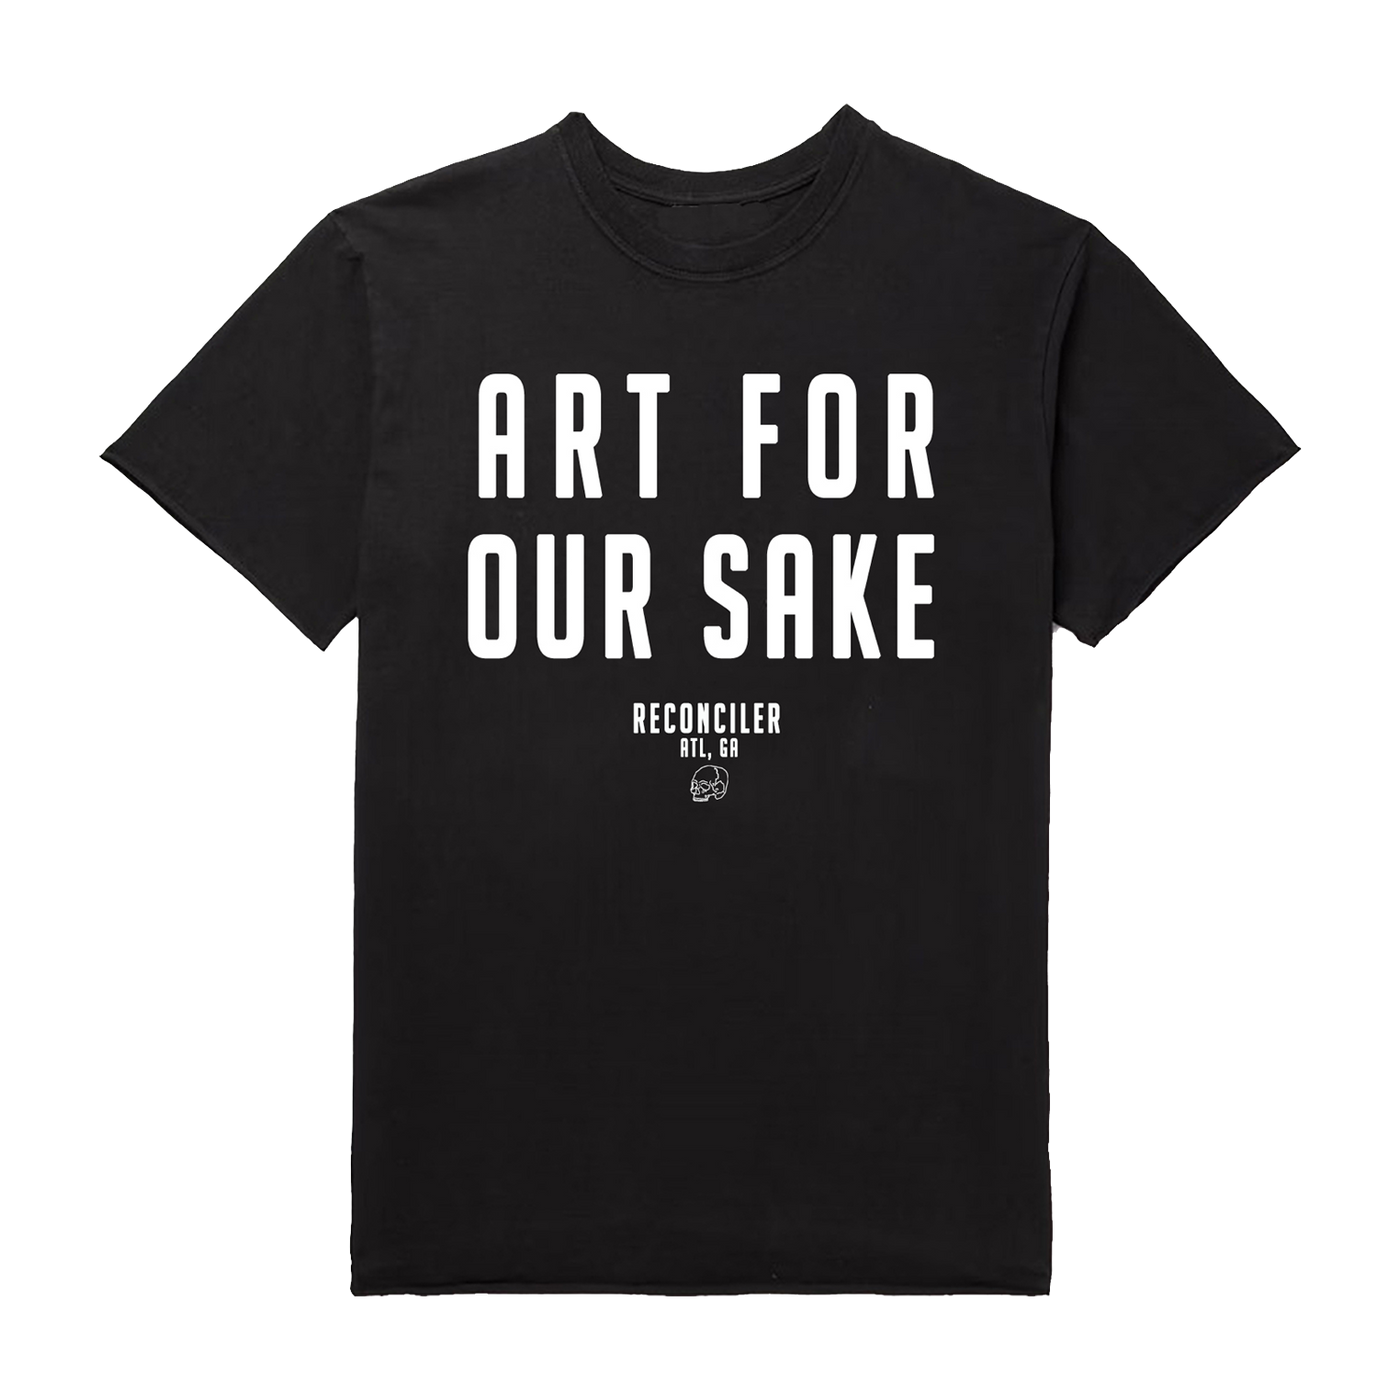 Reconciler - Art For Our Sake Shirt